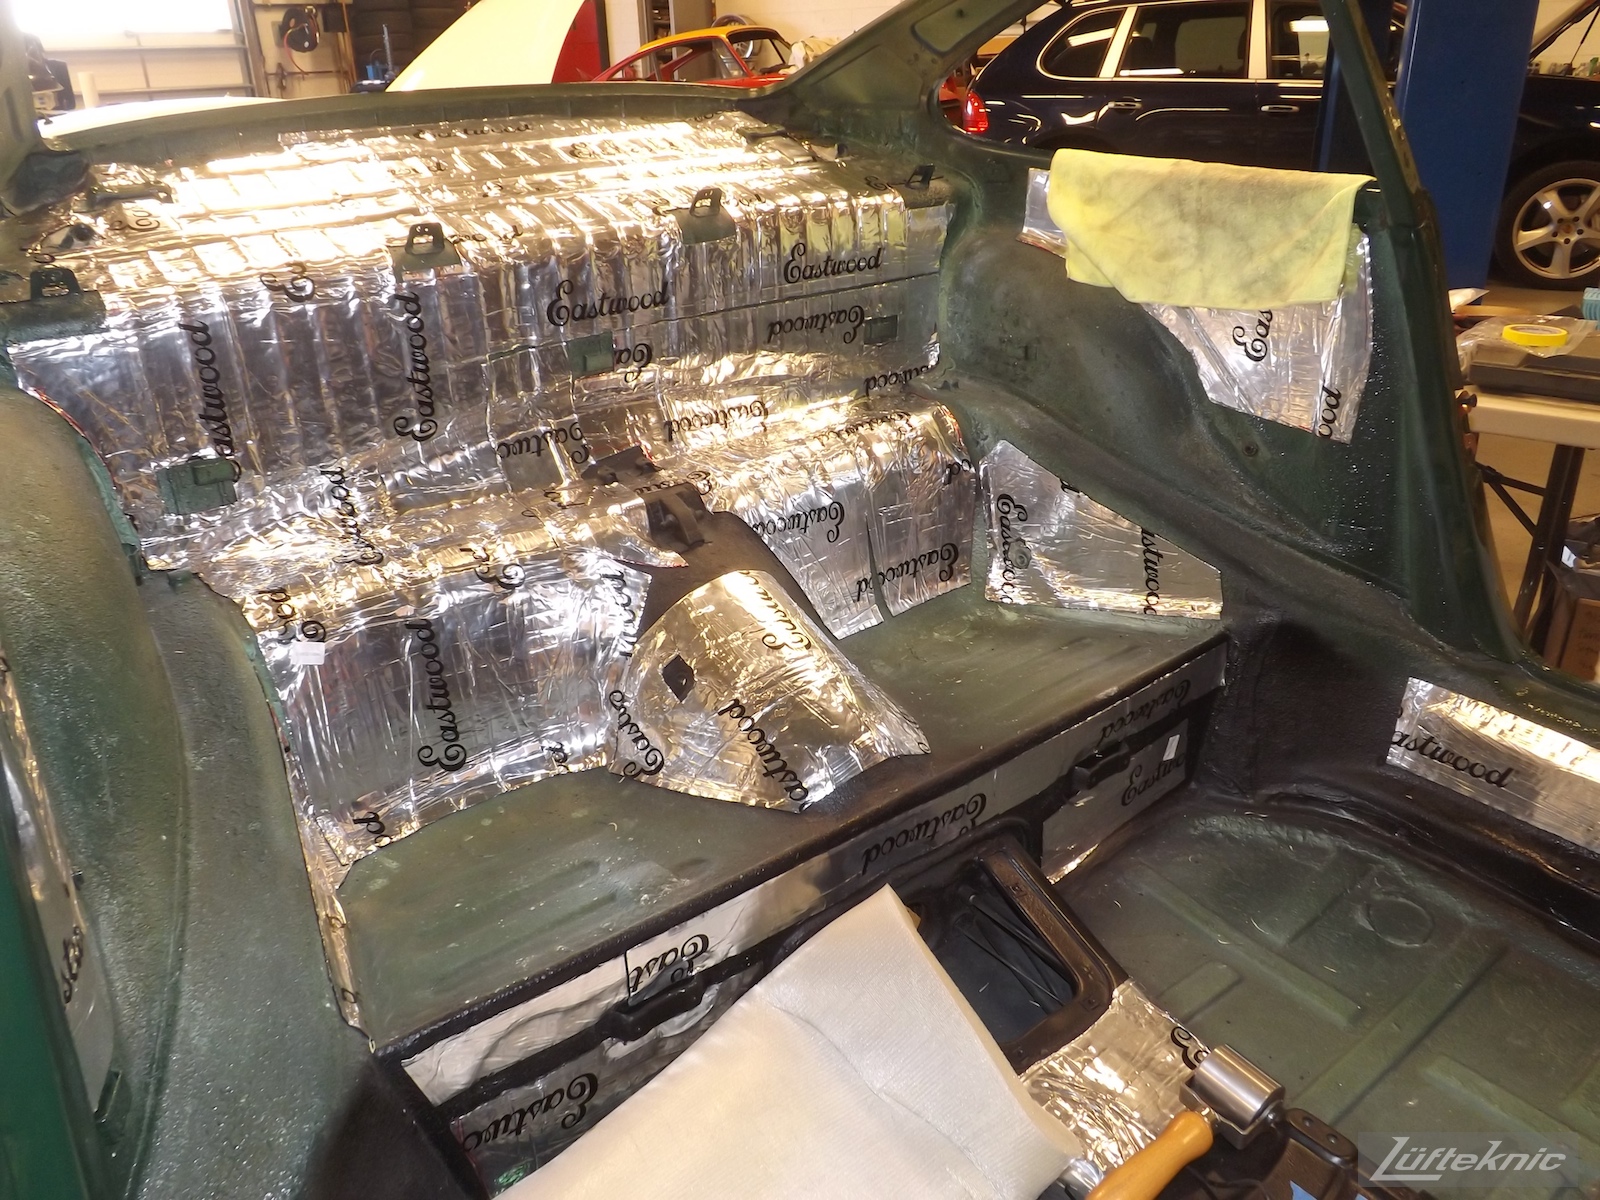 Eastwood sound deadening panels installed on an Irish Green Porsche 912 undergoing restoration at Lufteknic.